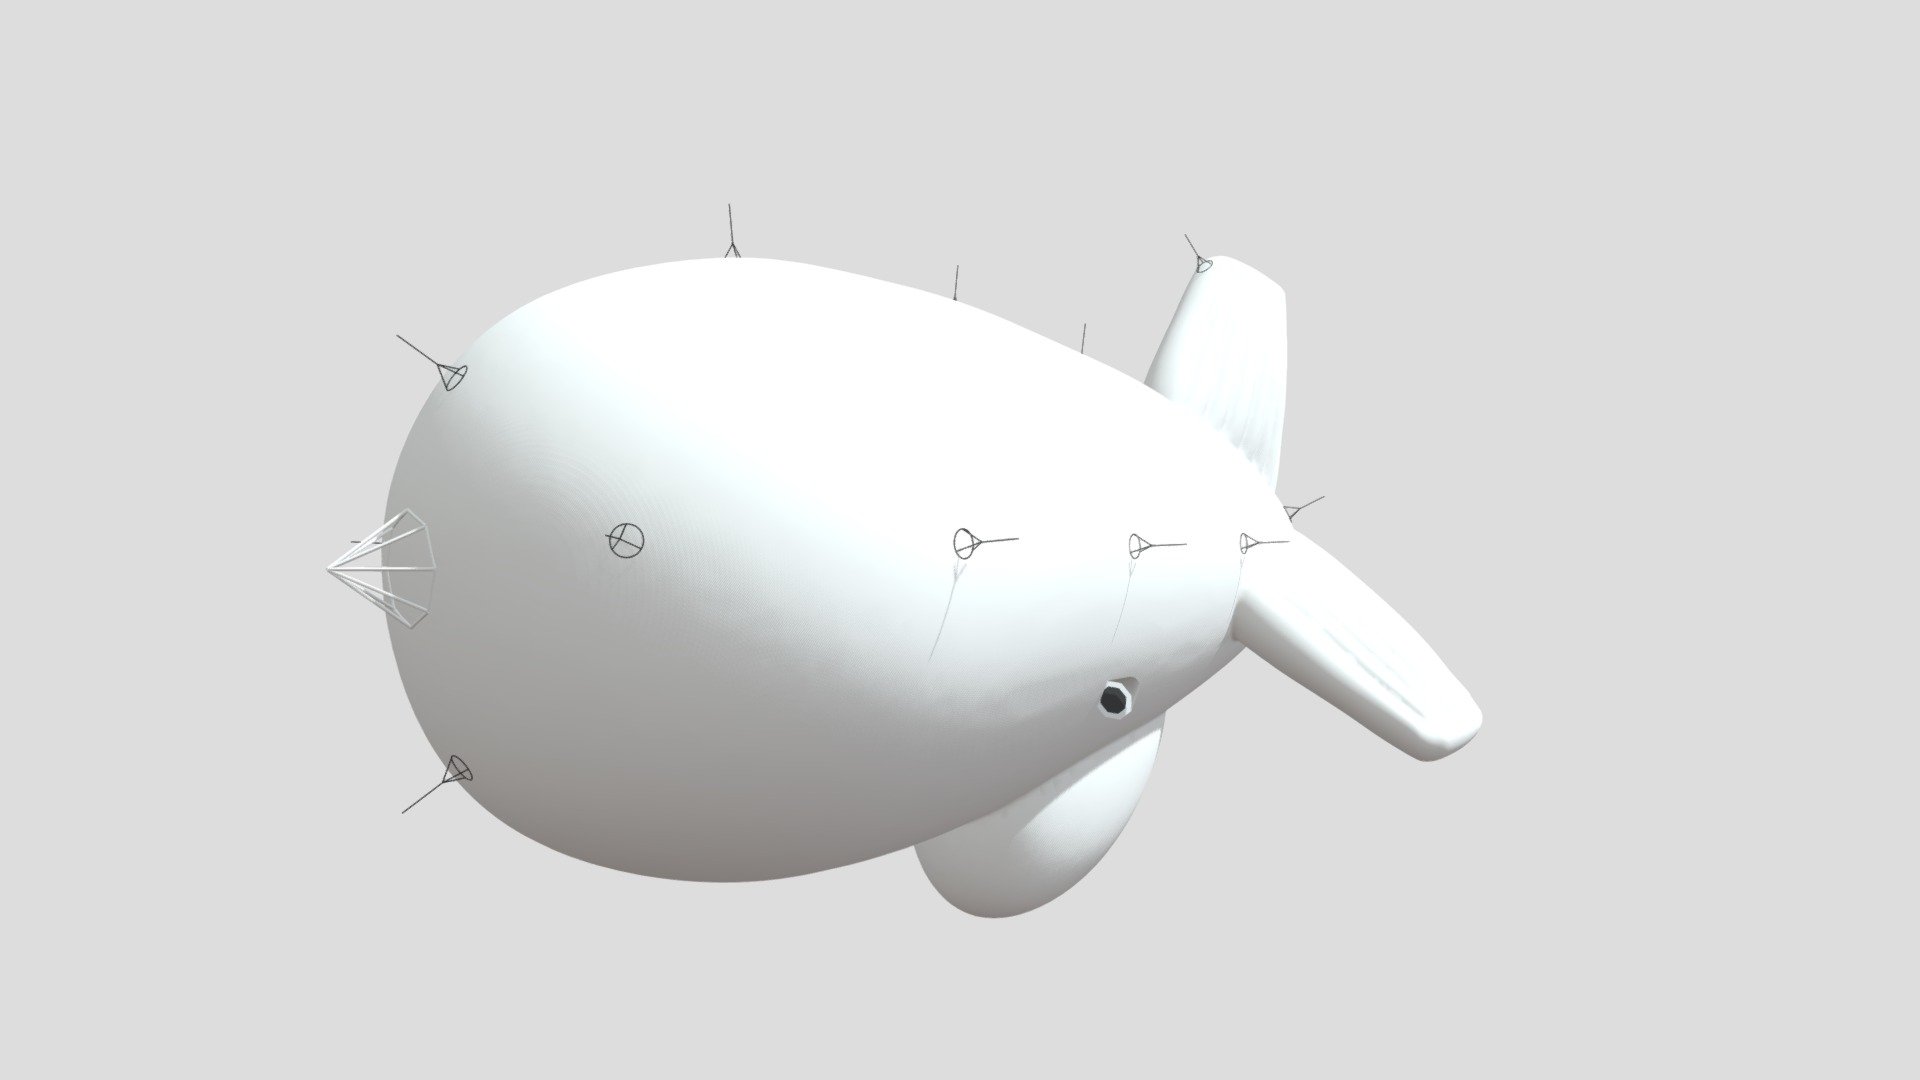 aerostat - 3D model by RSAF Open House 2021 (@affertog) 3d model